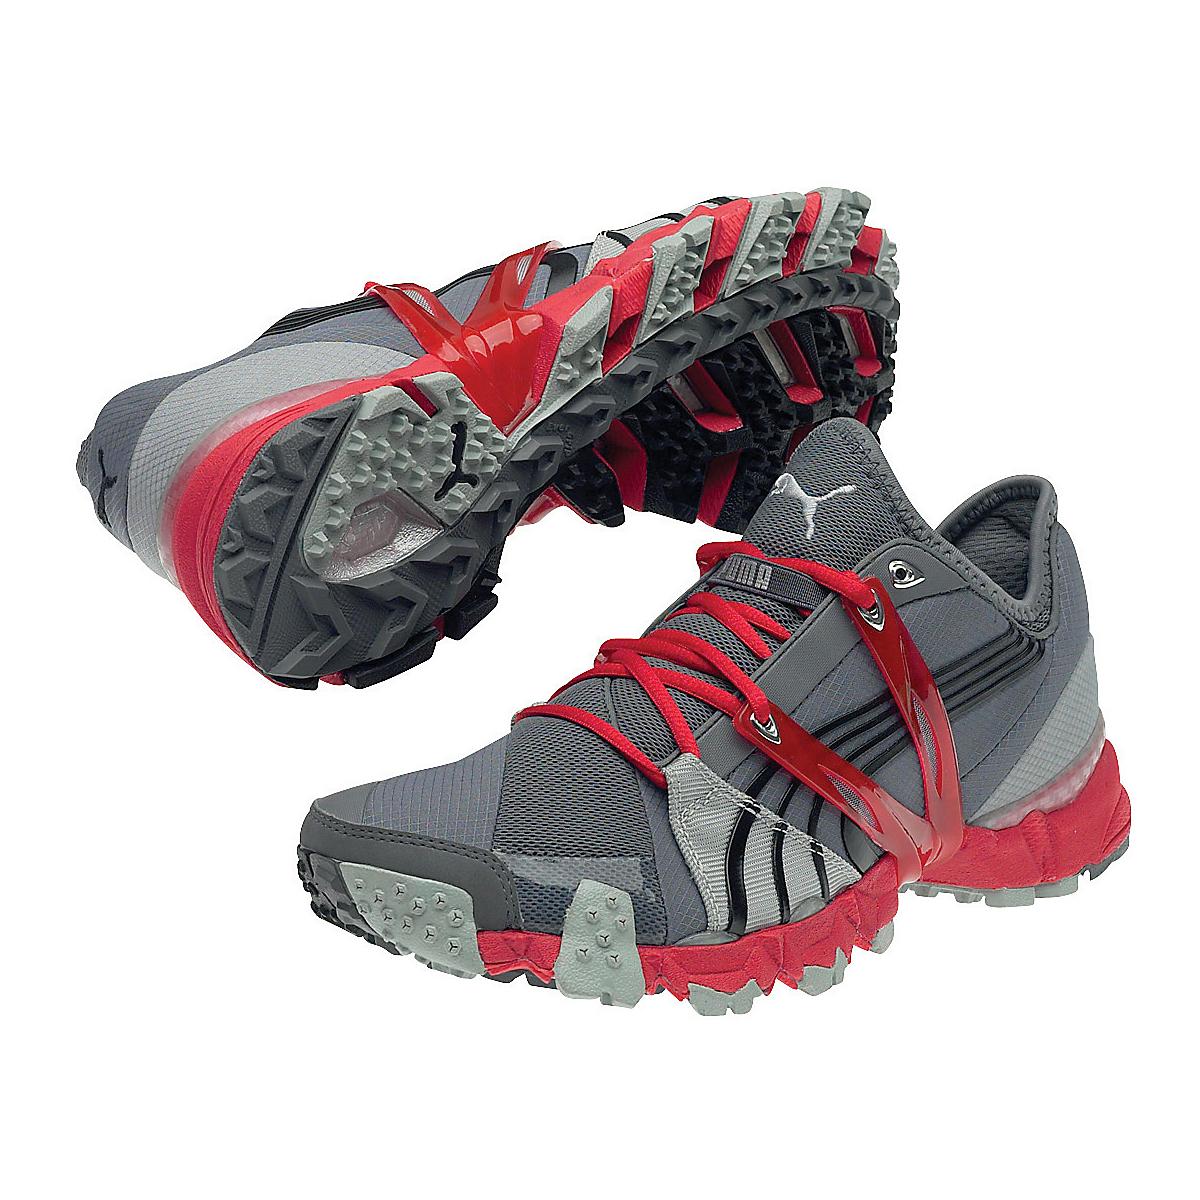 Mens PUMA Complete Trailfox III Trail Running Shoe at Road Runner Sports